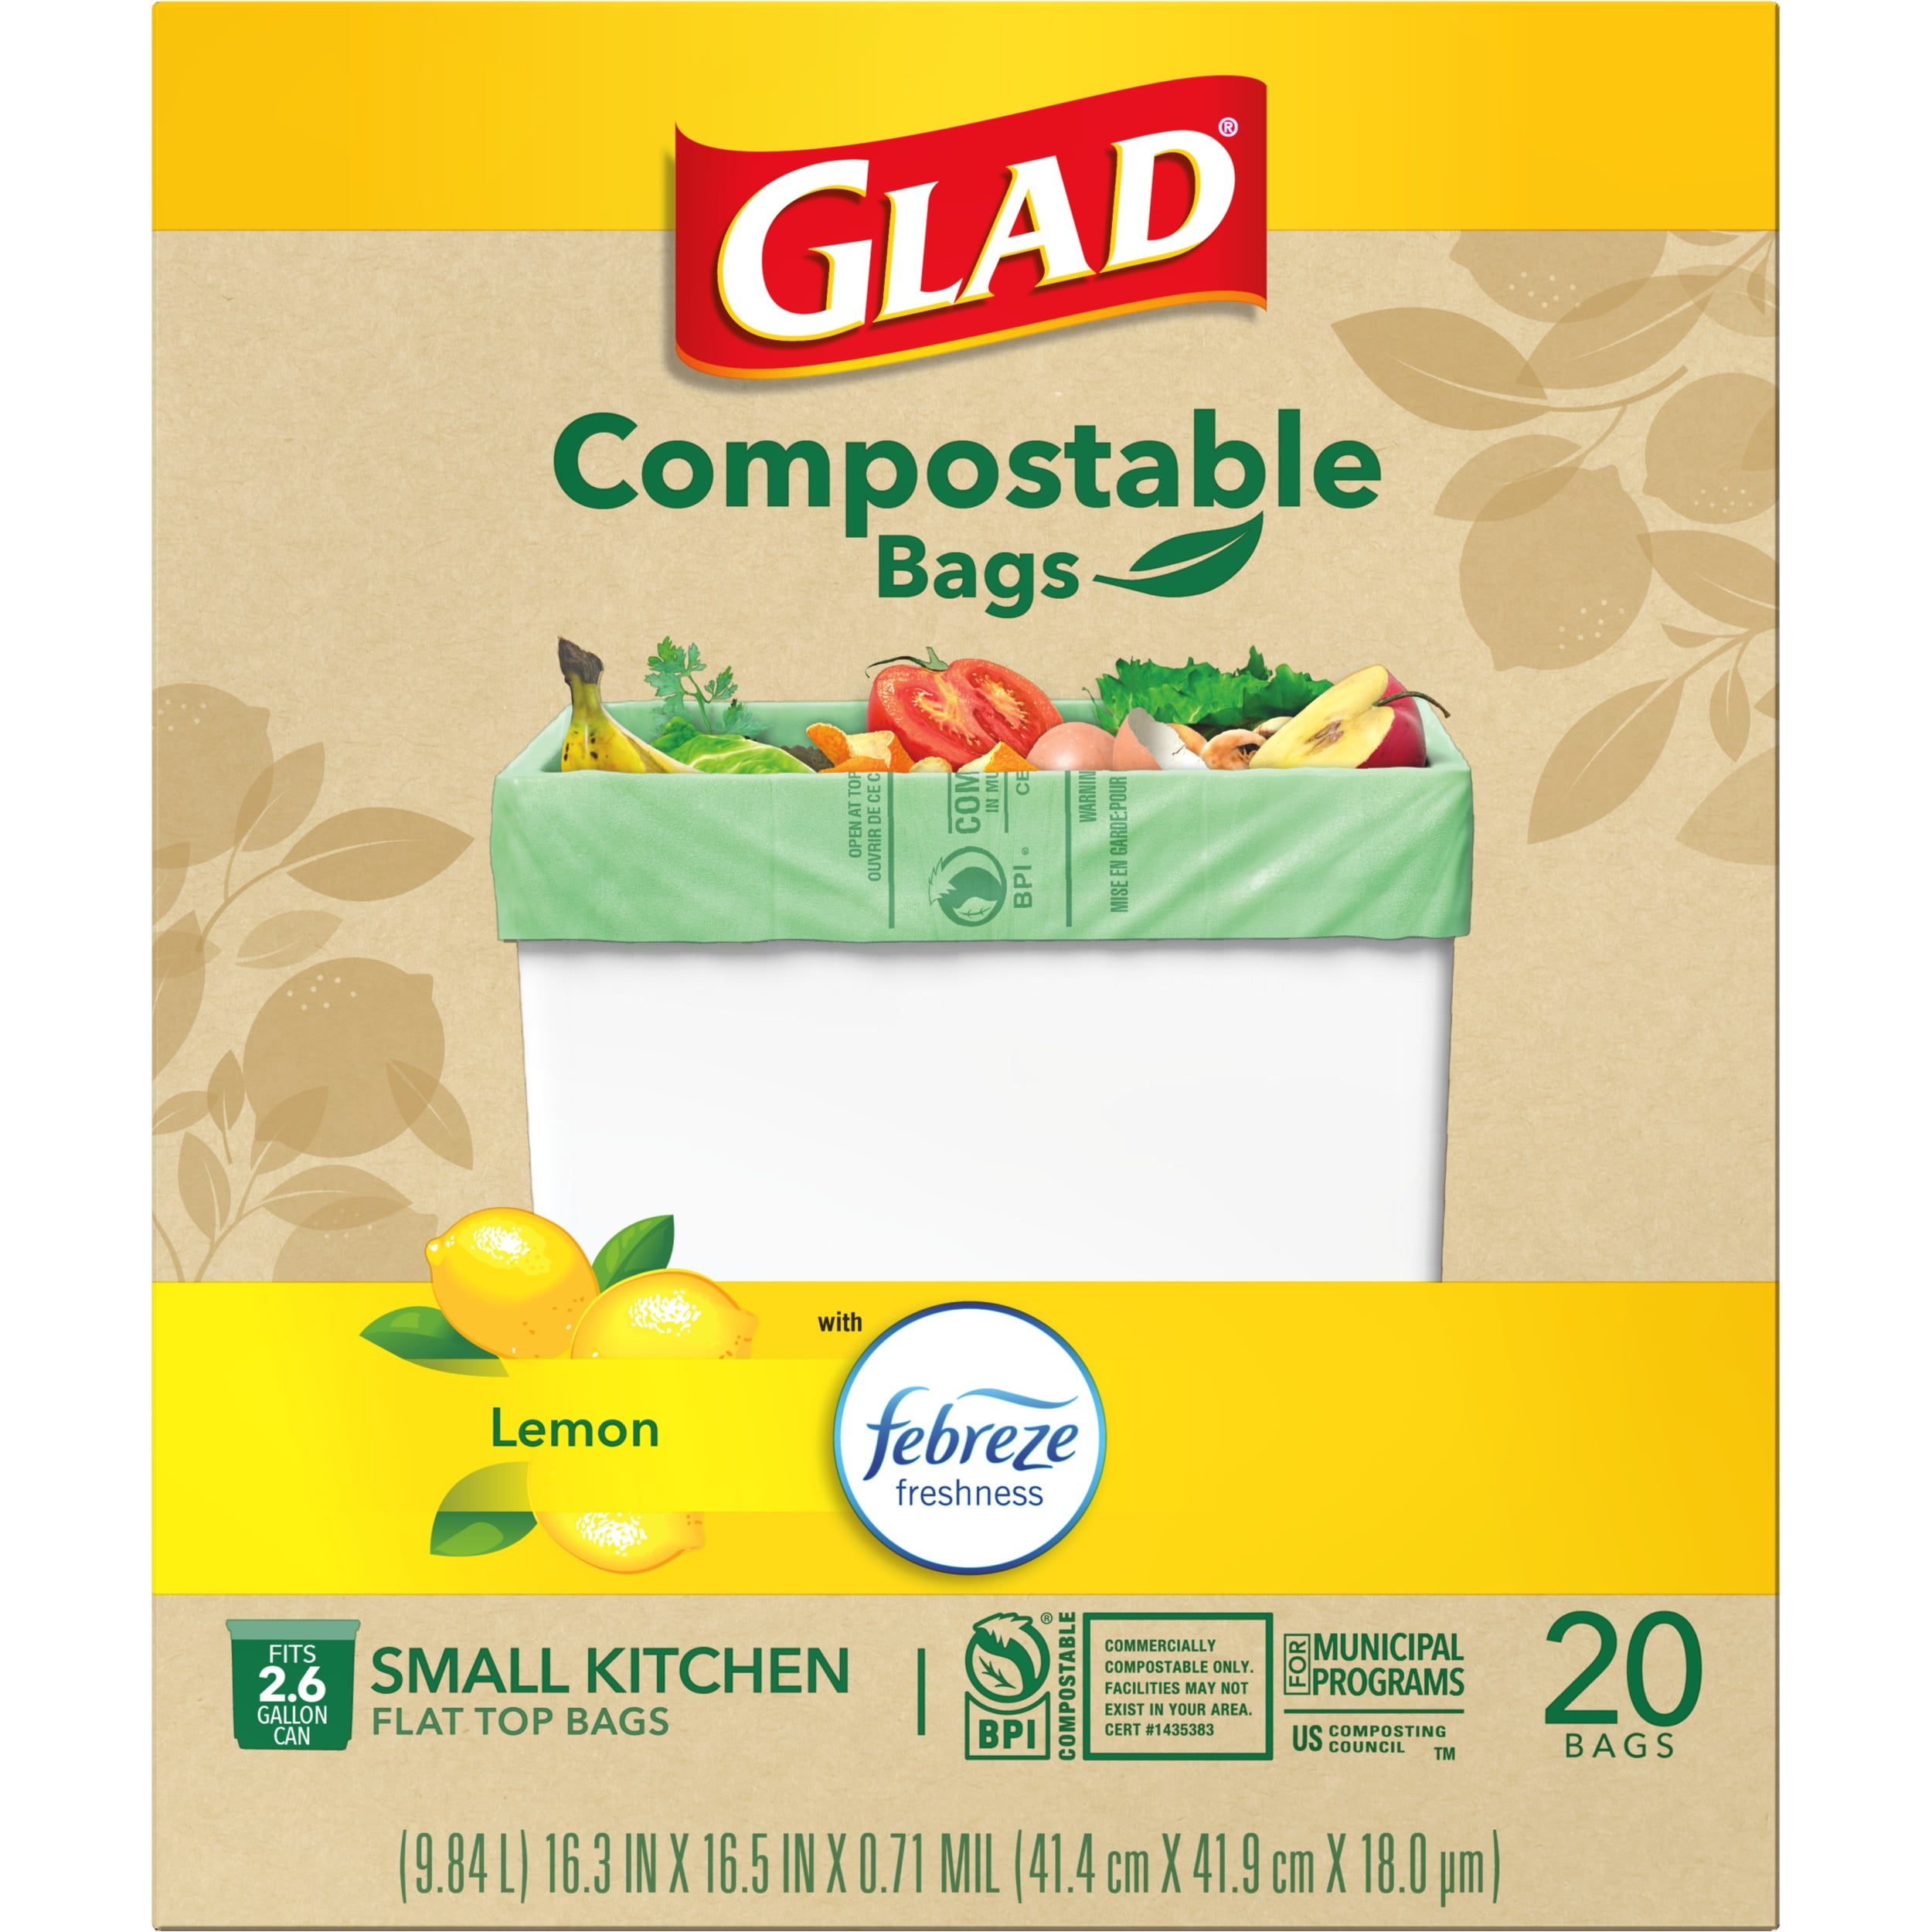 BEIDOU-PAC 100% Compostable Trash Bags, 3 Gallon Compost Bags